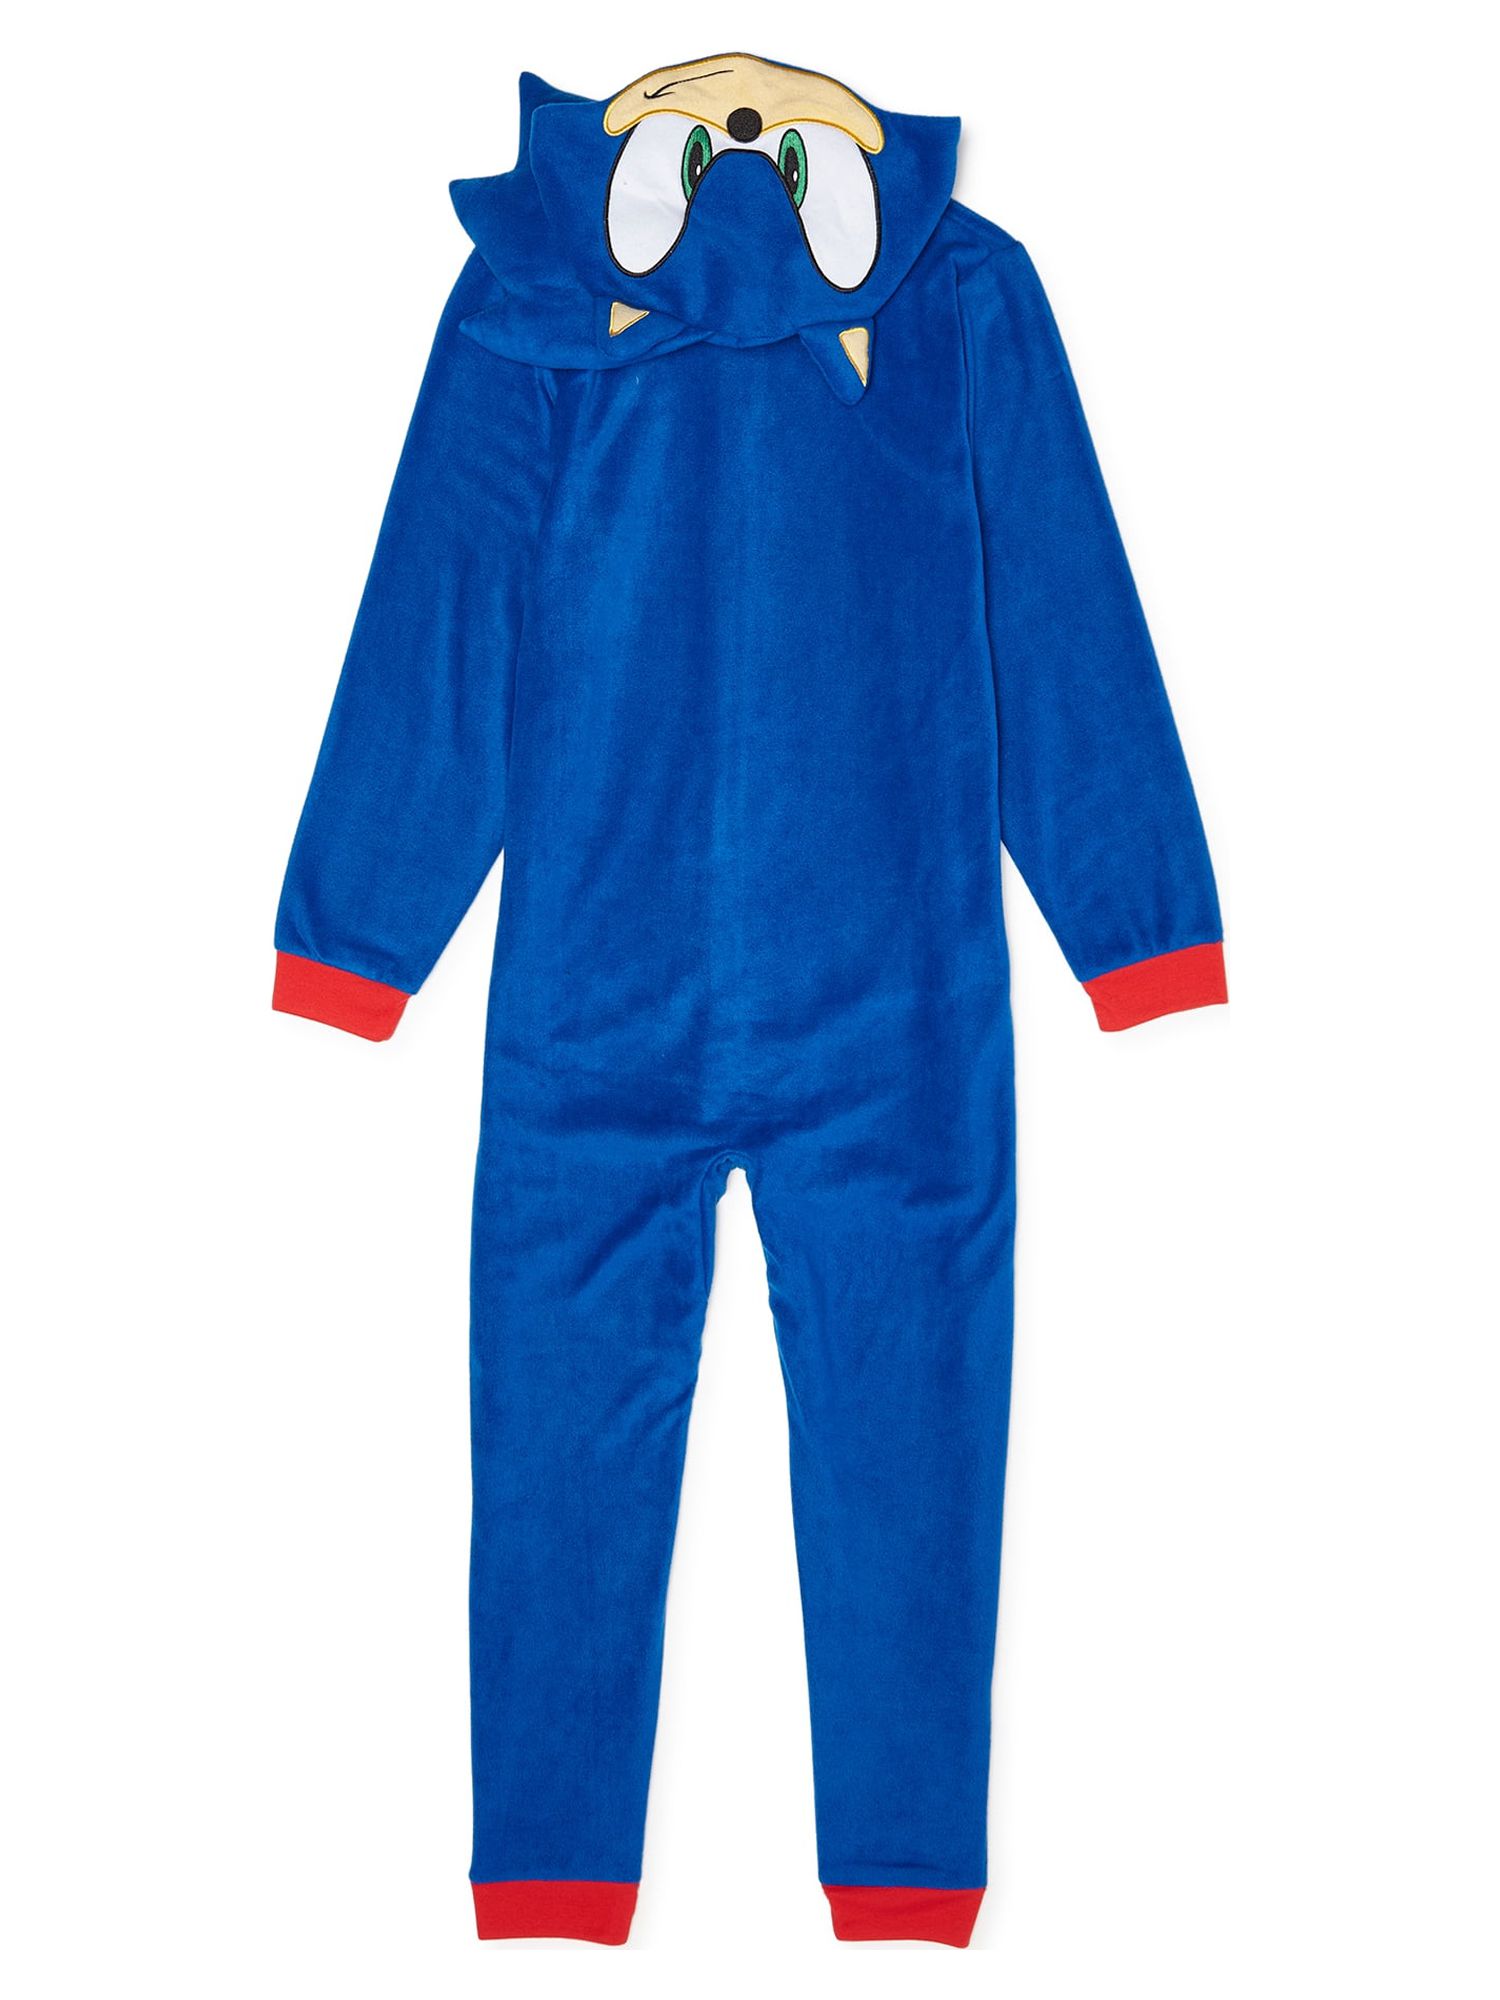 Sonic the Hedgehog Boys Hooded Character Pajama Blanket Sleeper Sizes 4-12 - image 2 of 3